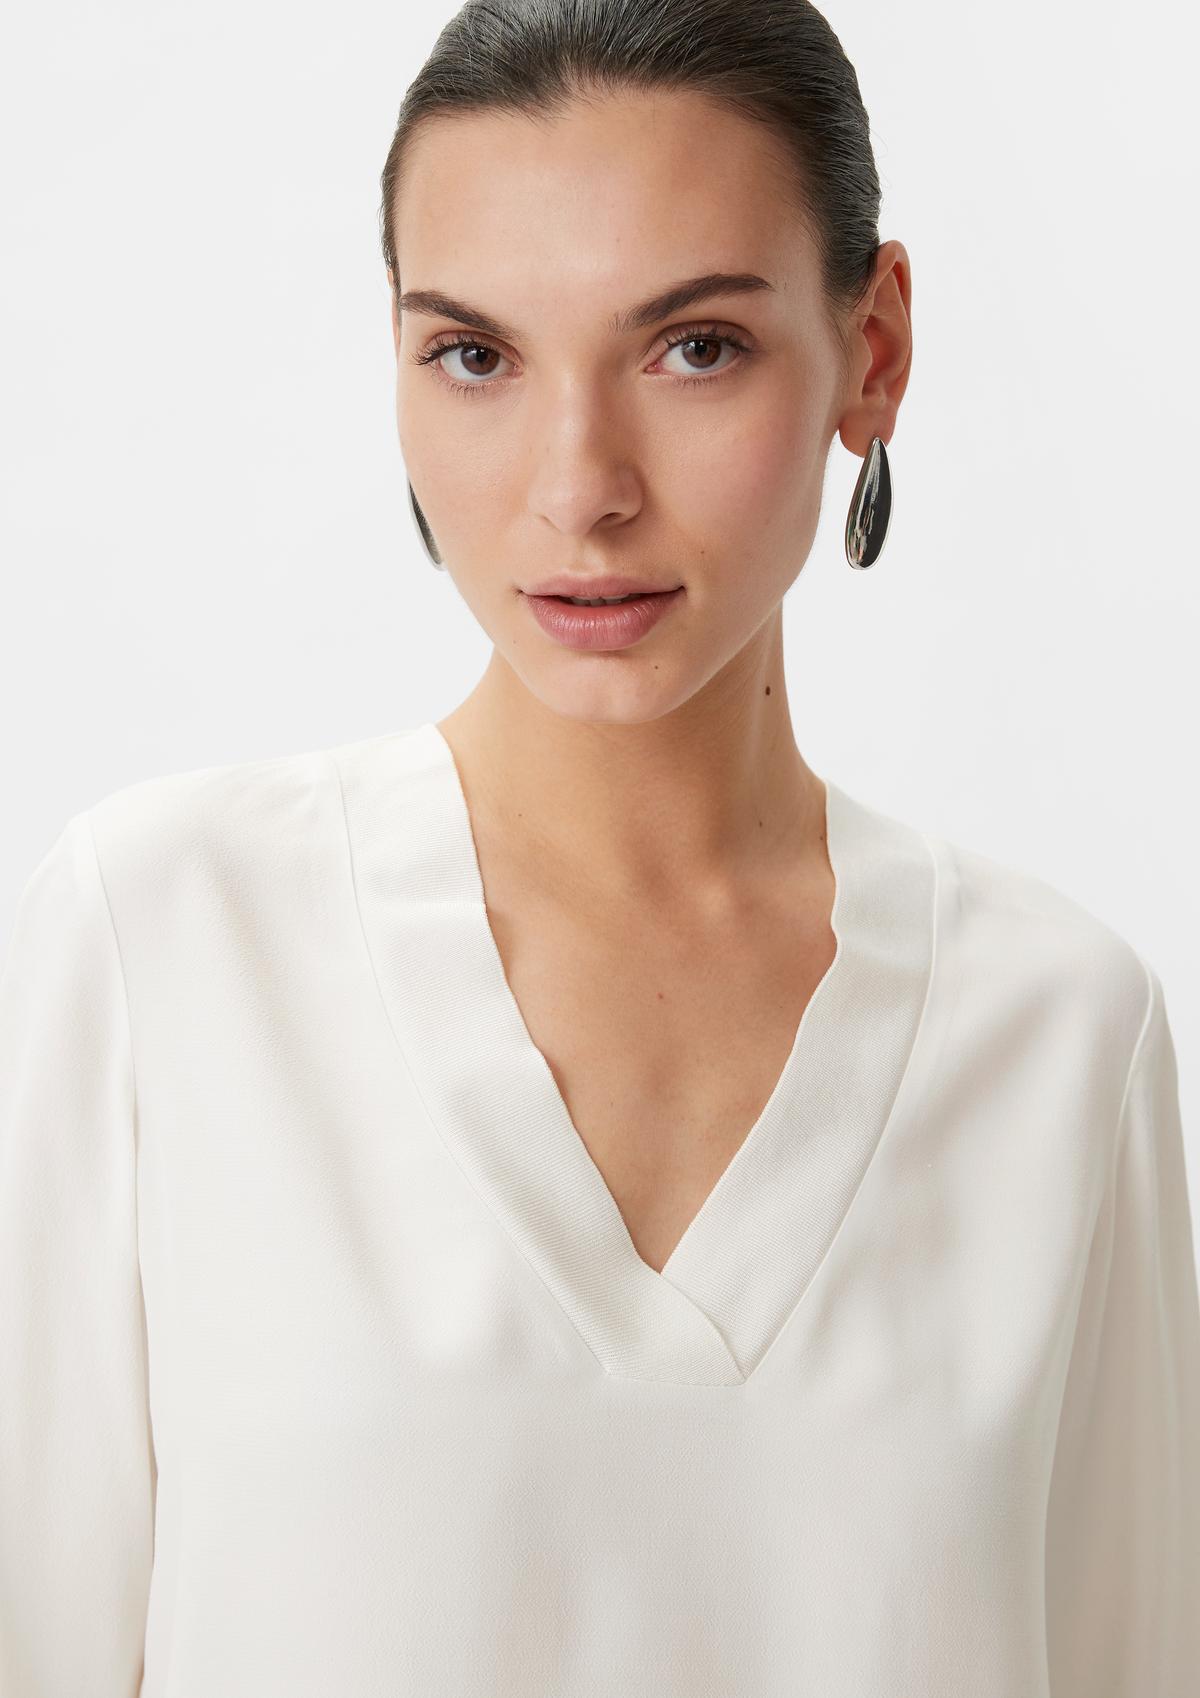 comma Crêpe blouse made of pure viscose